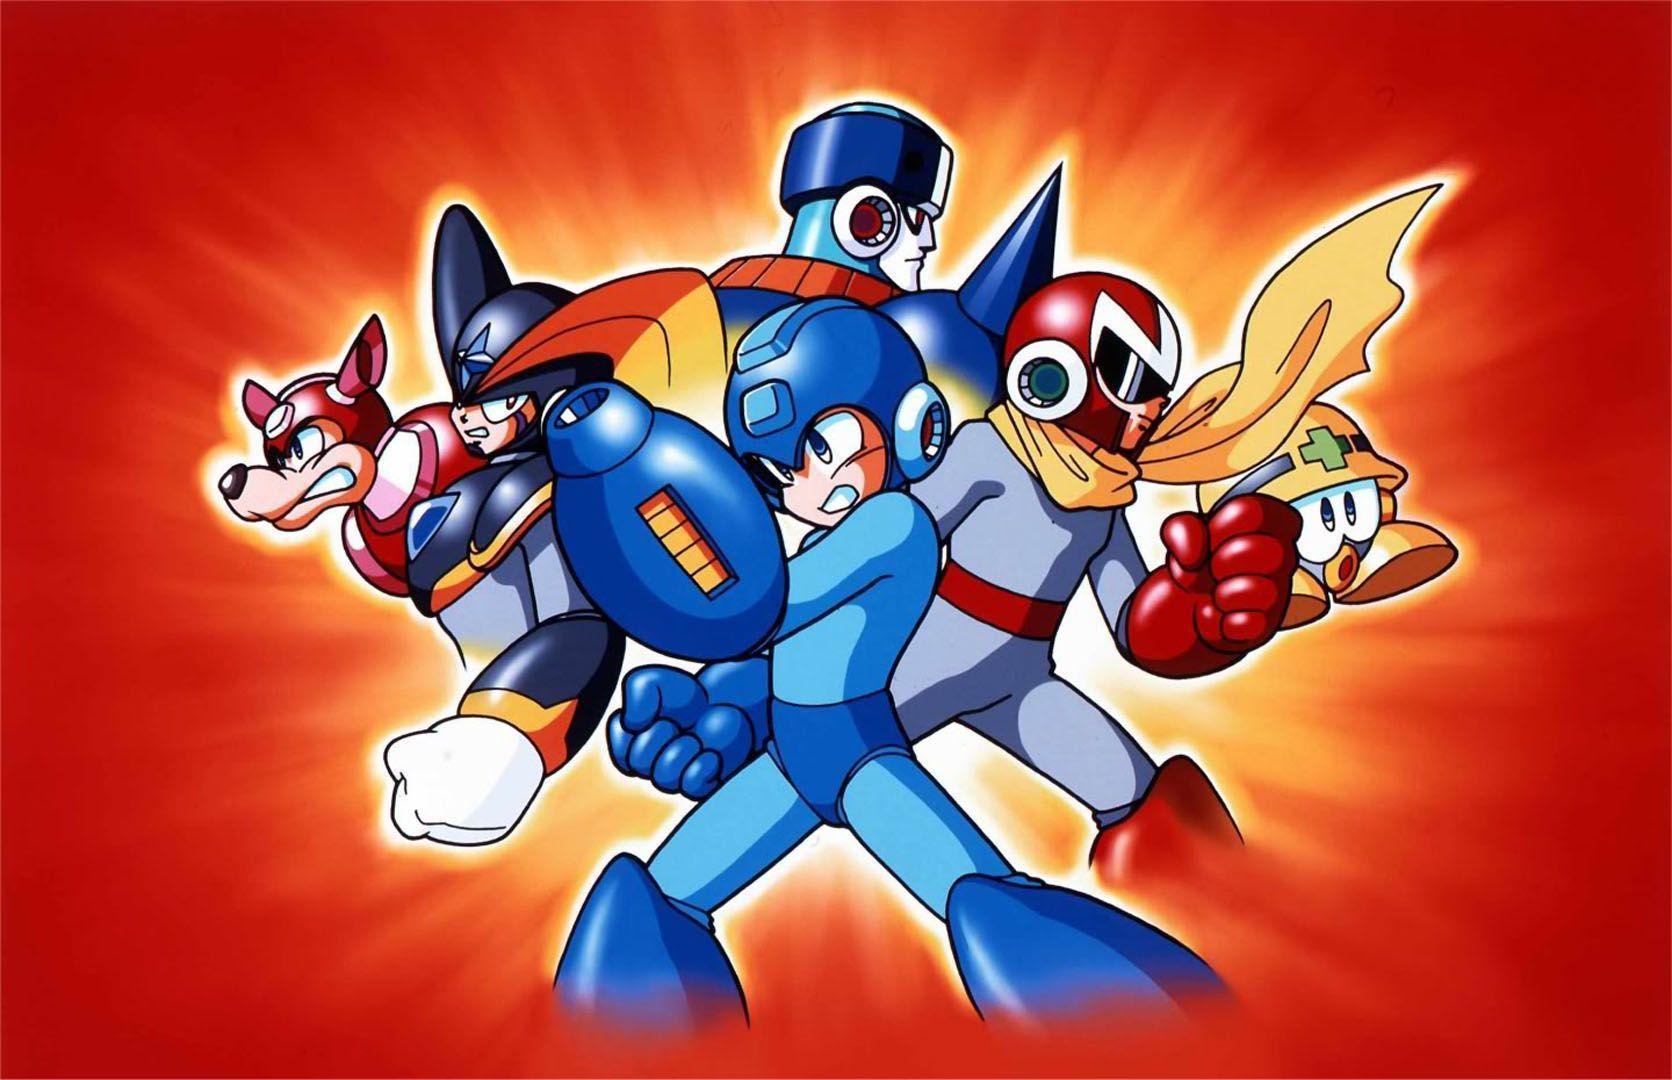 The Megaman Team Games Wallpaper Image featuring Megaman